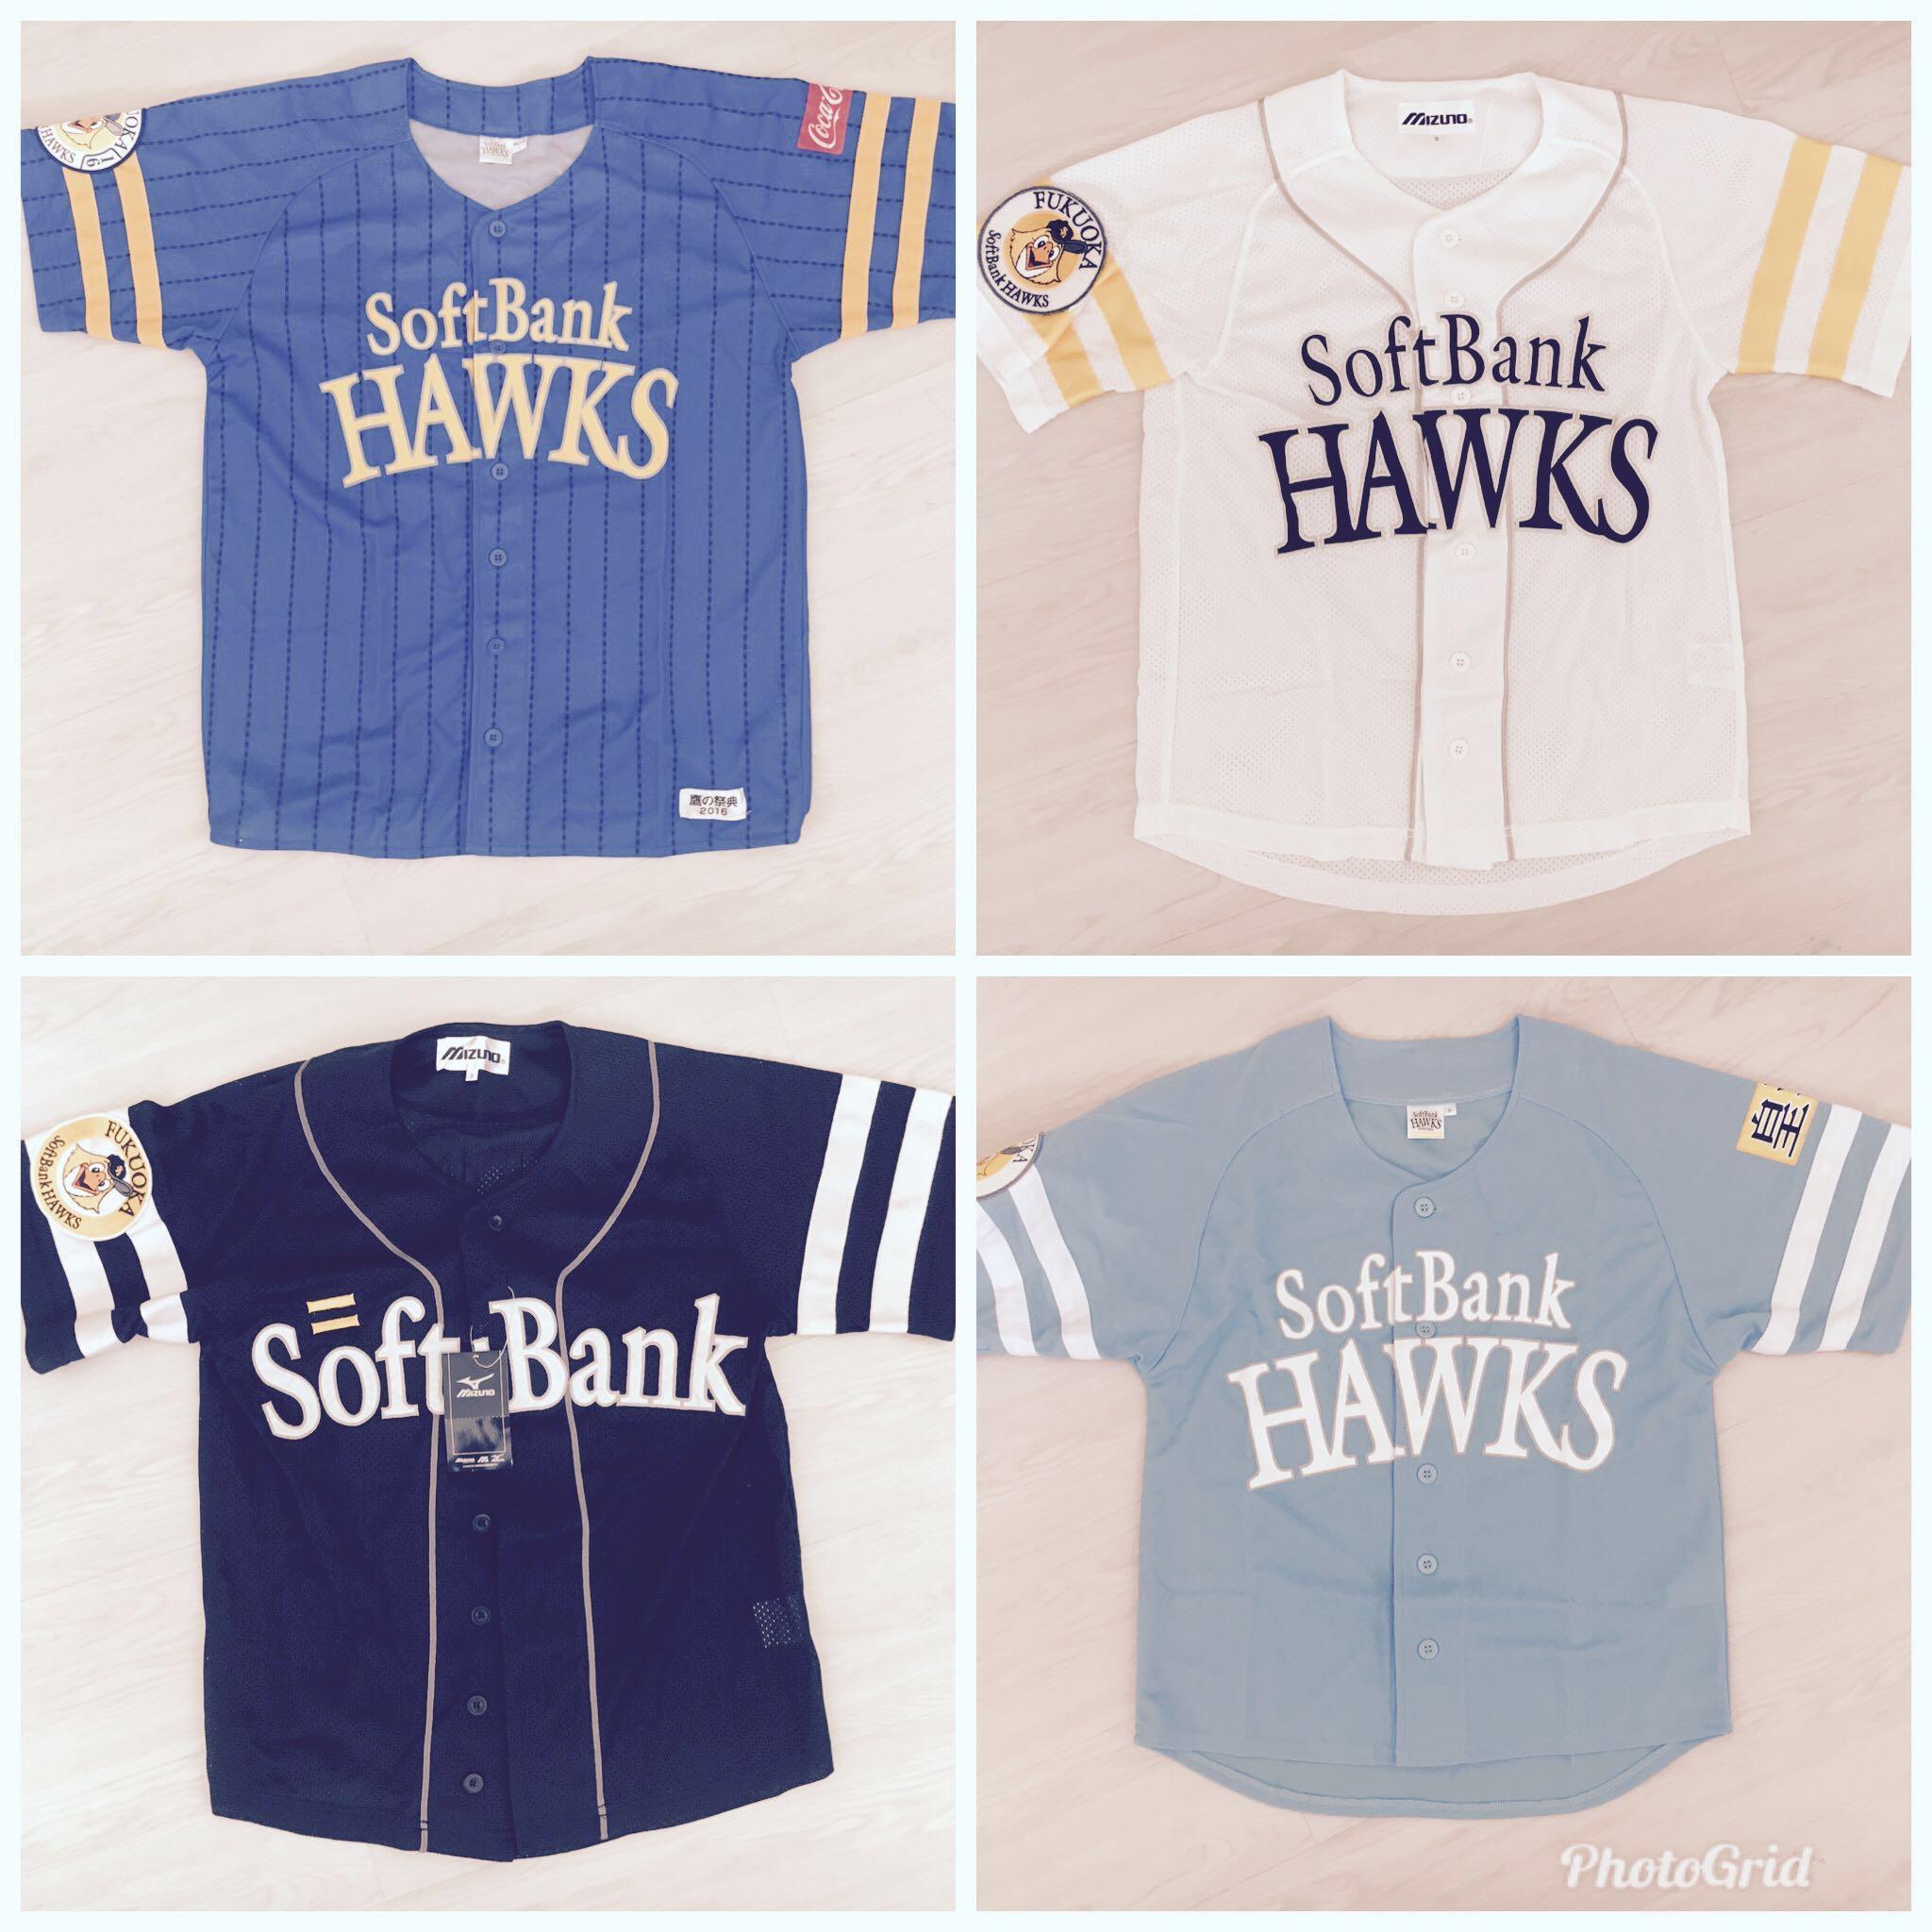 softbank hawks jersey